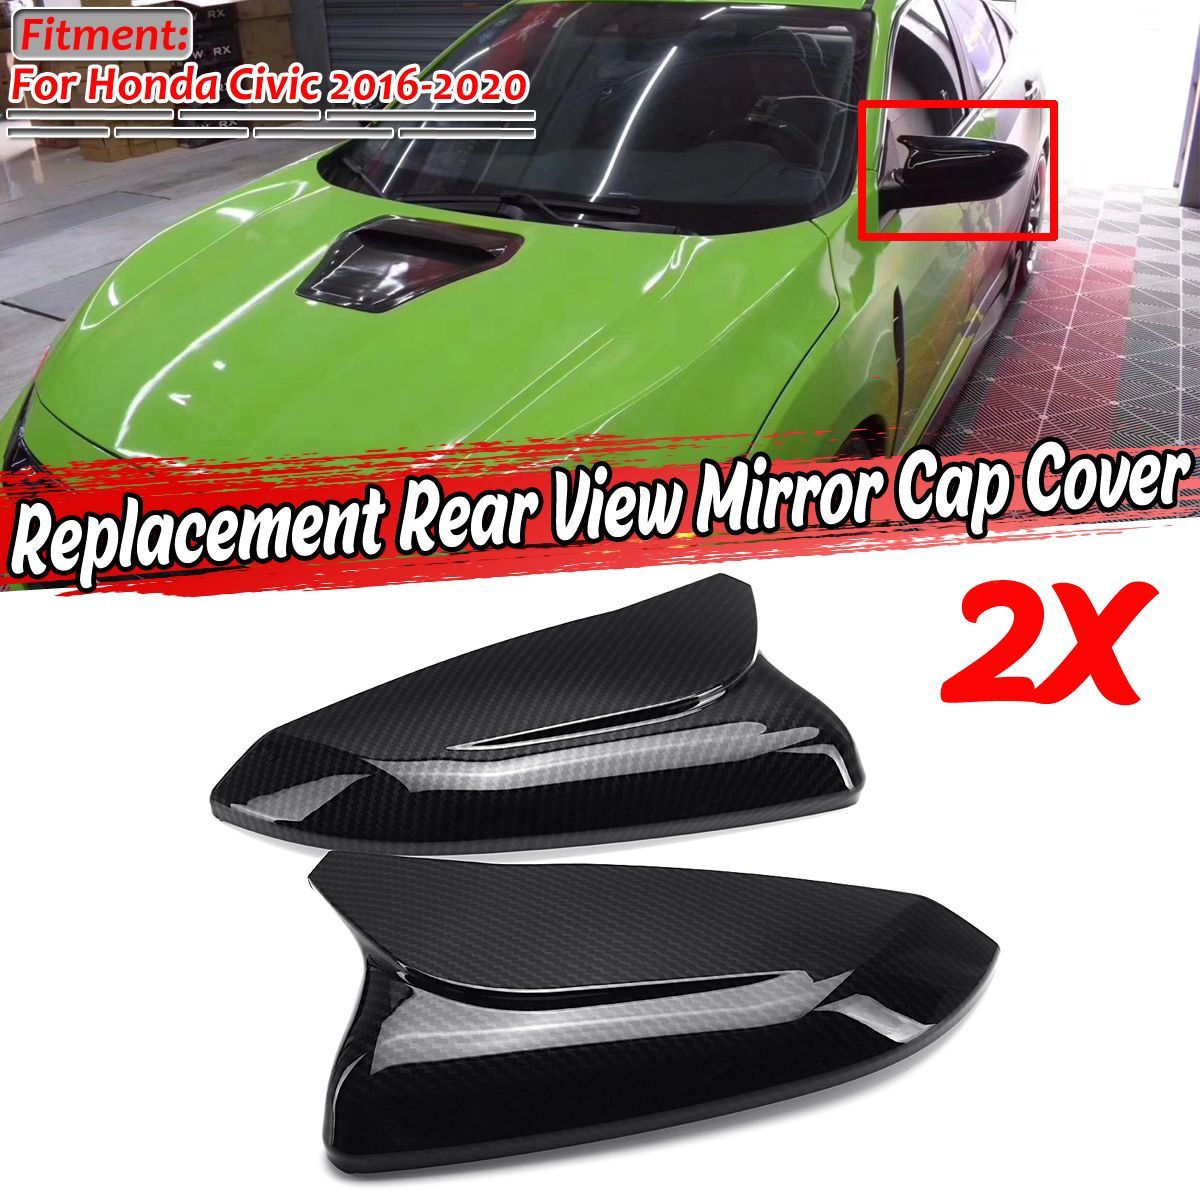 Rear-View-Mirror-Cap-Cover-Replacement-Carbon-Fiber-Look-For-Honda-Civic-2016-2020-1705221